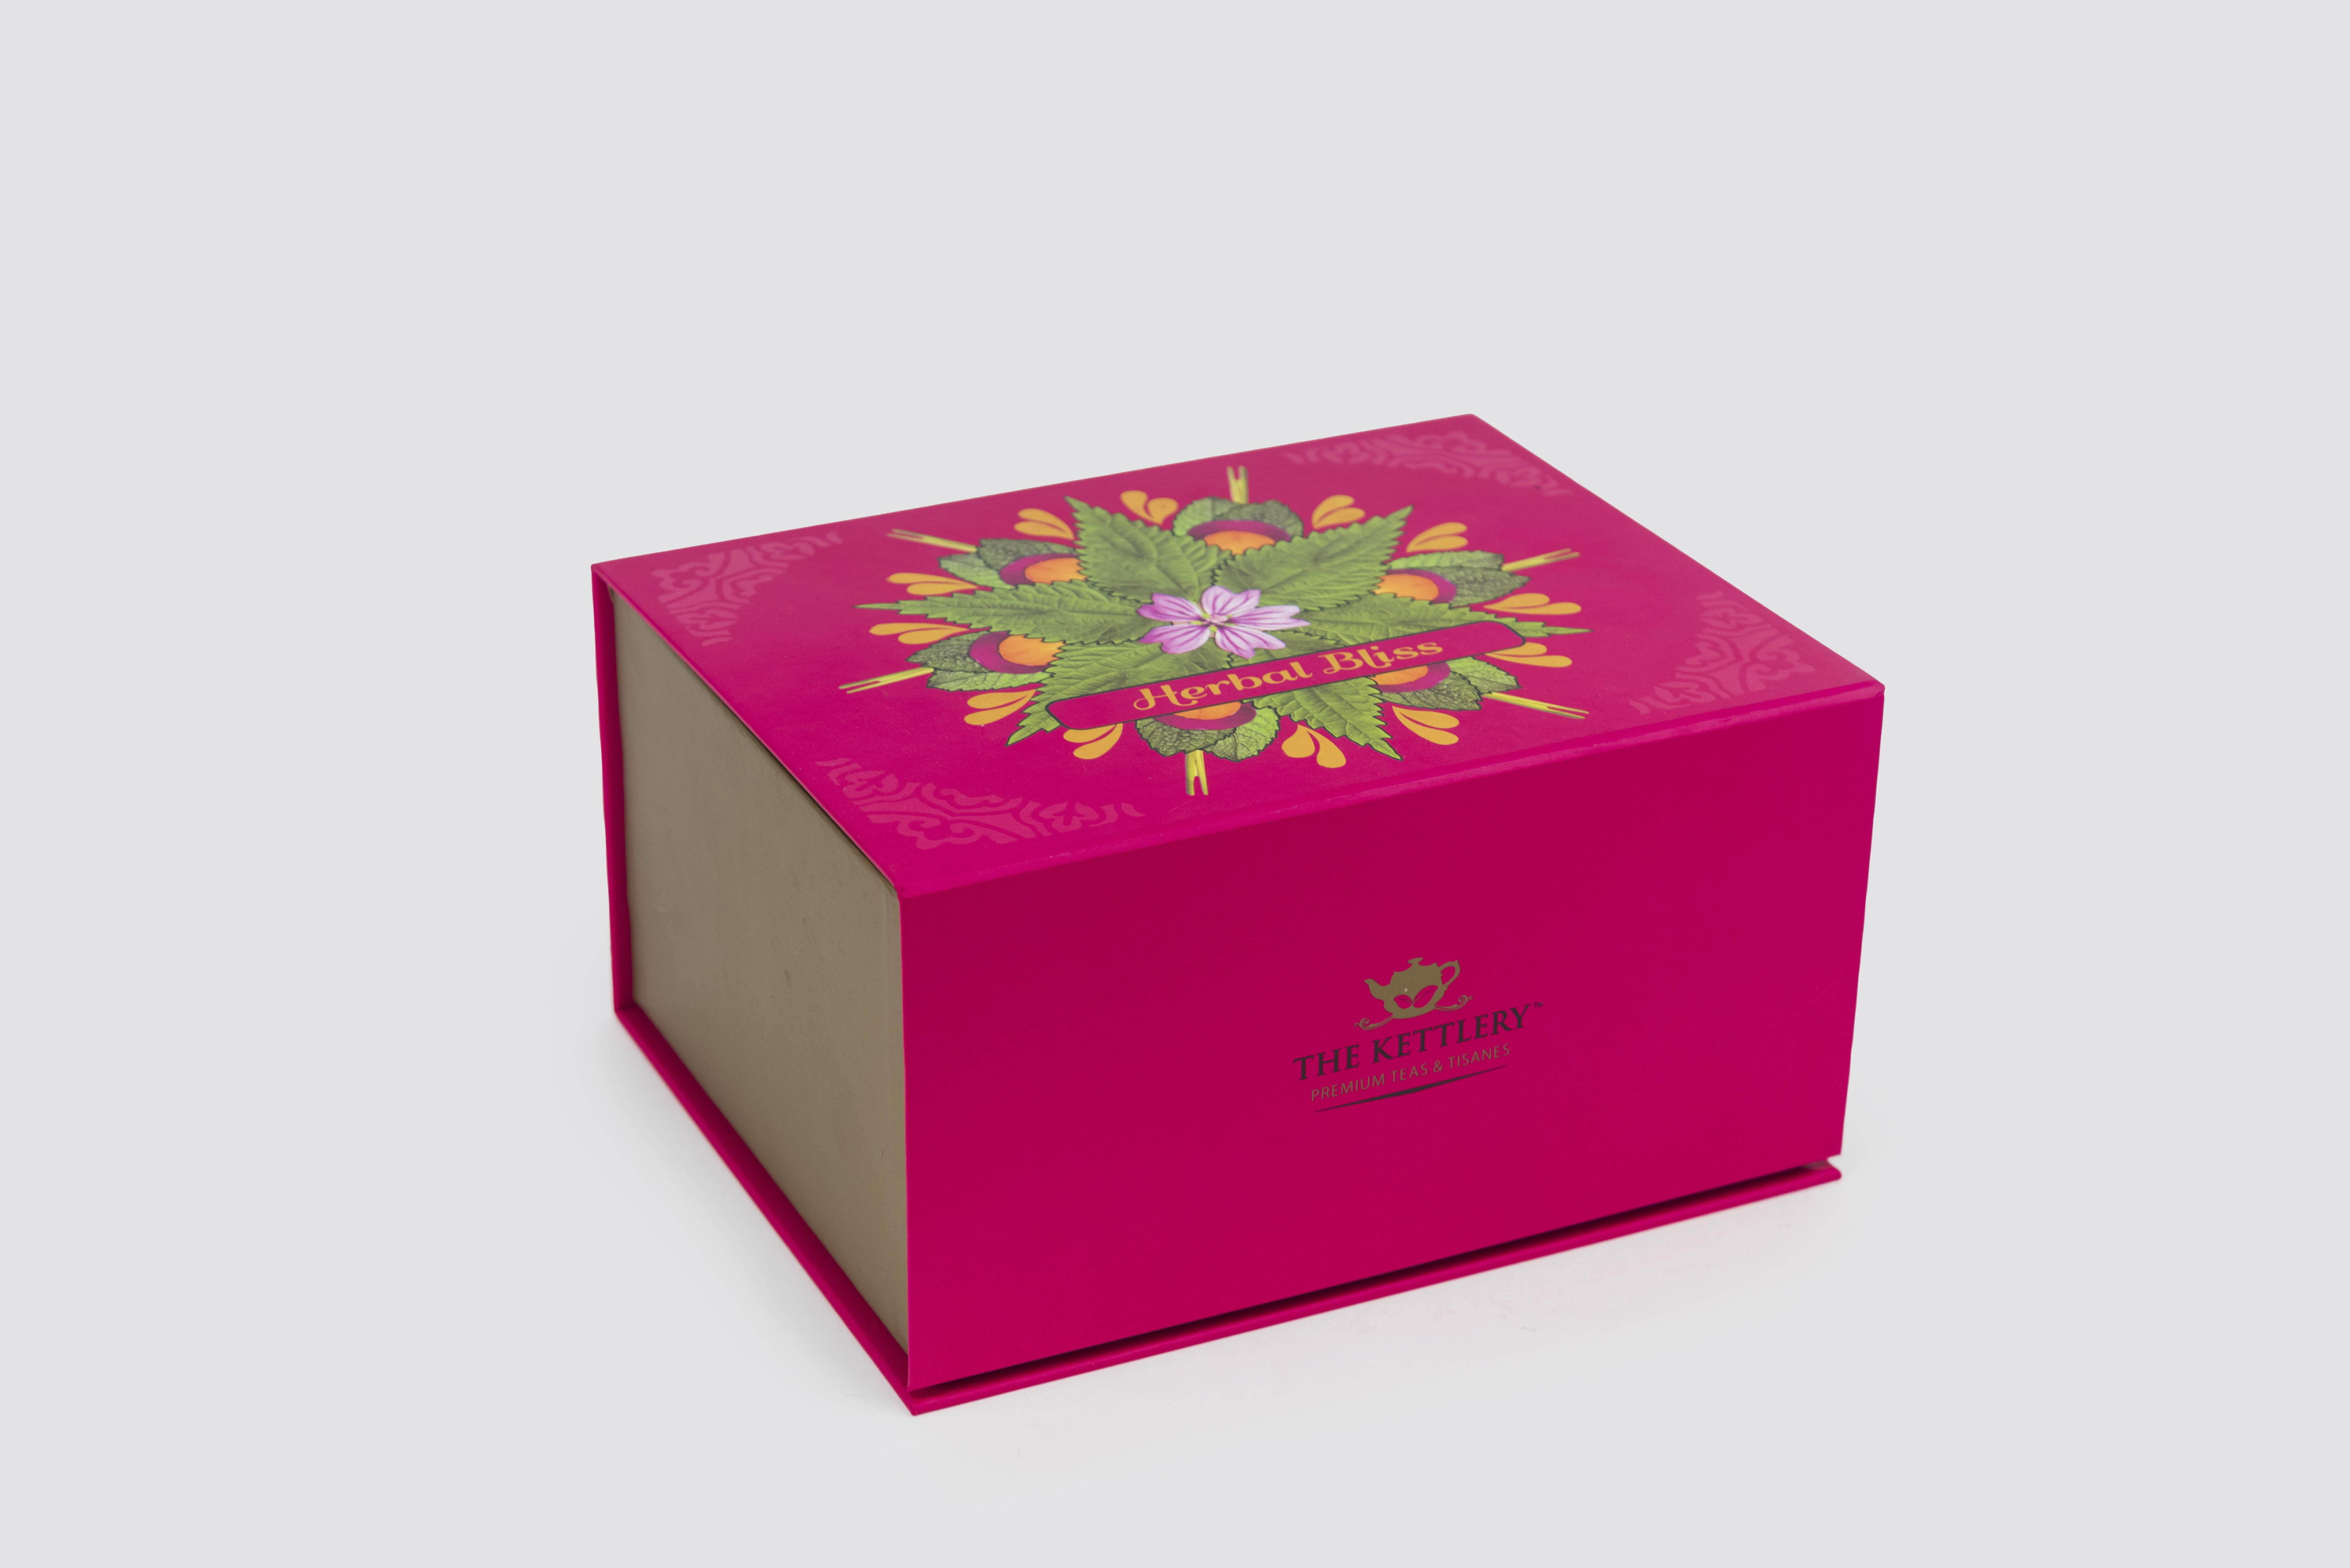 Gift Box Matcha Set, Wholesale, Vehgro